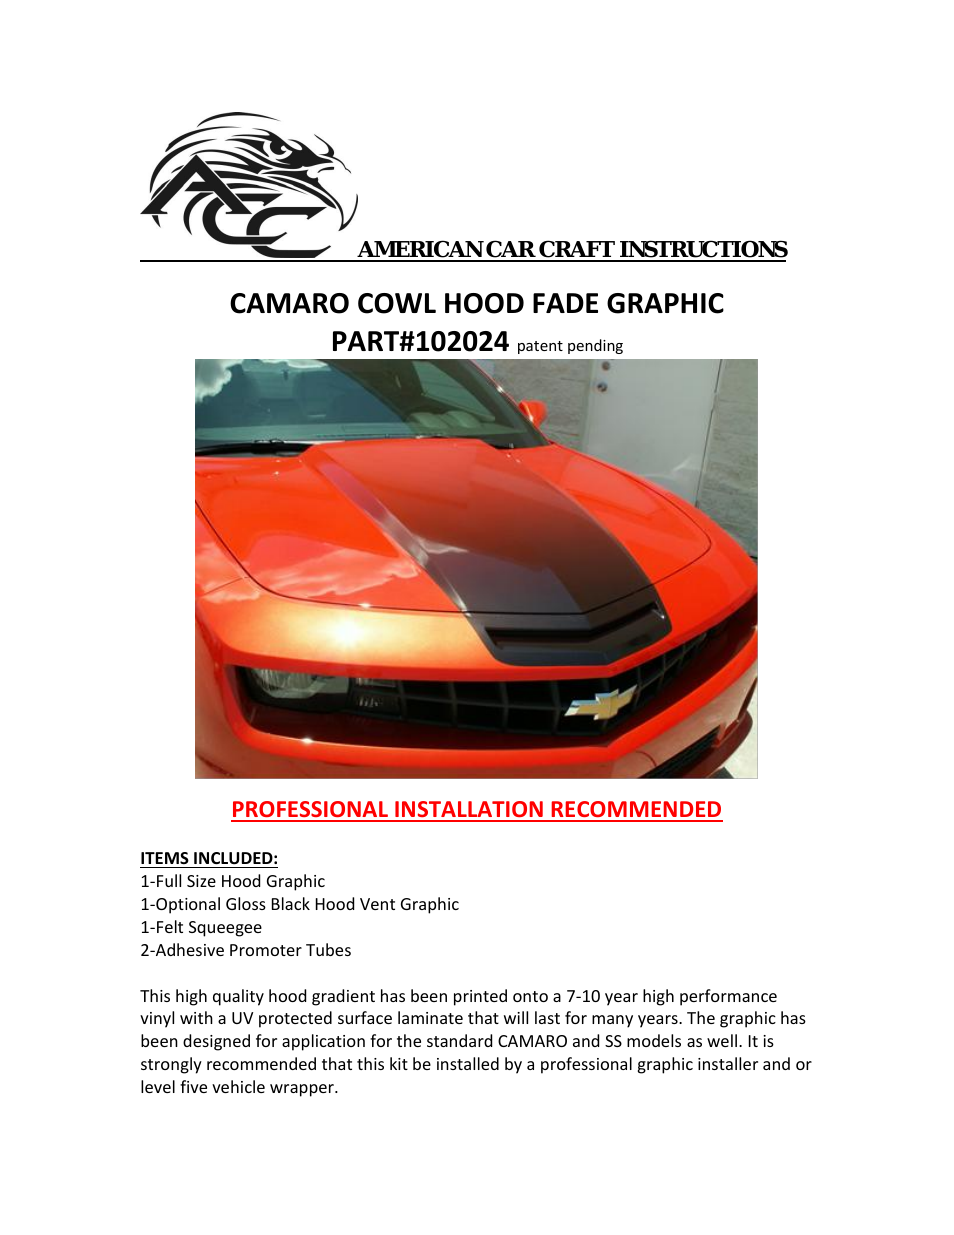 Camaro Cowl Hood Fade Graphic 2010-2013 Black